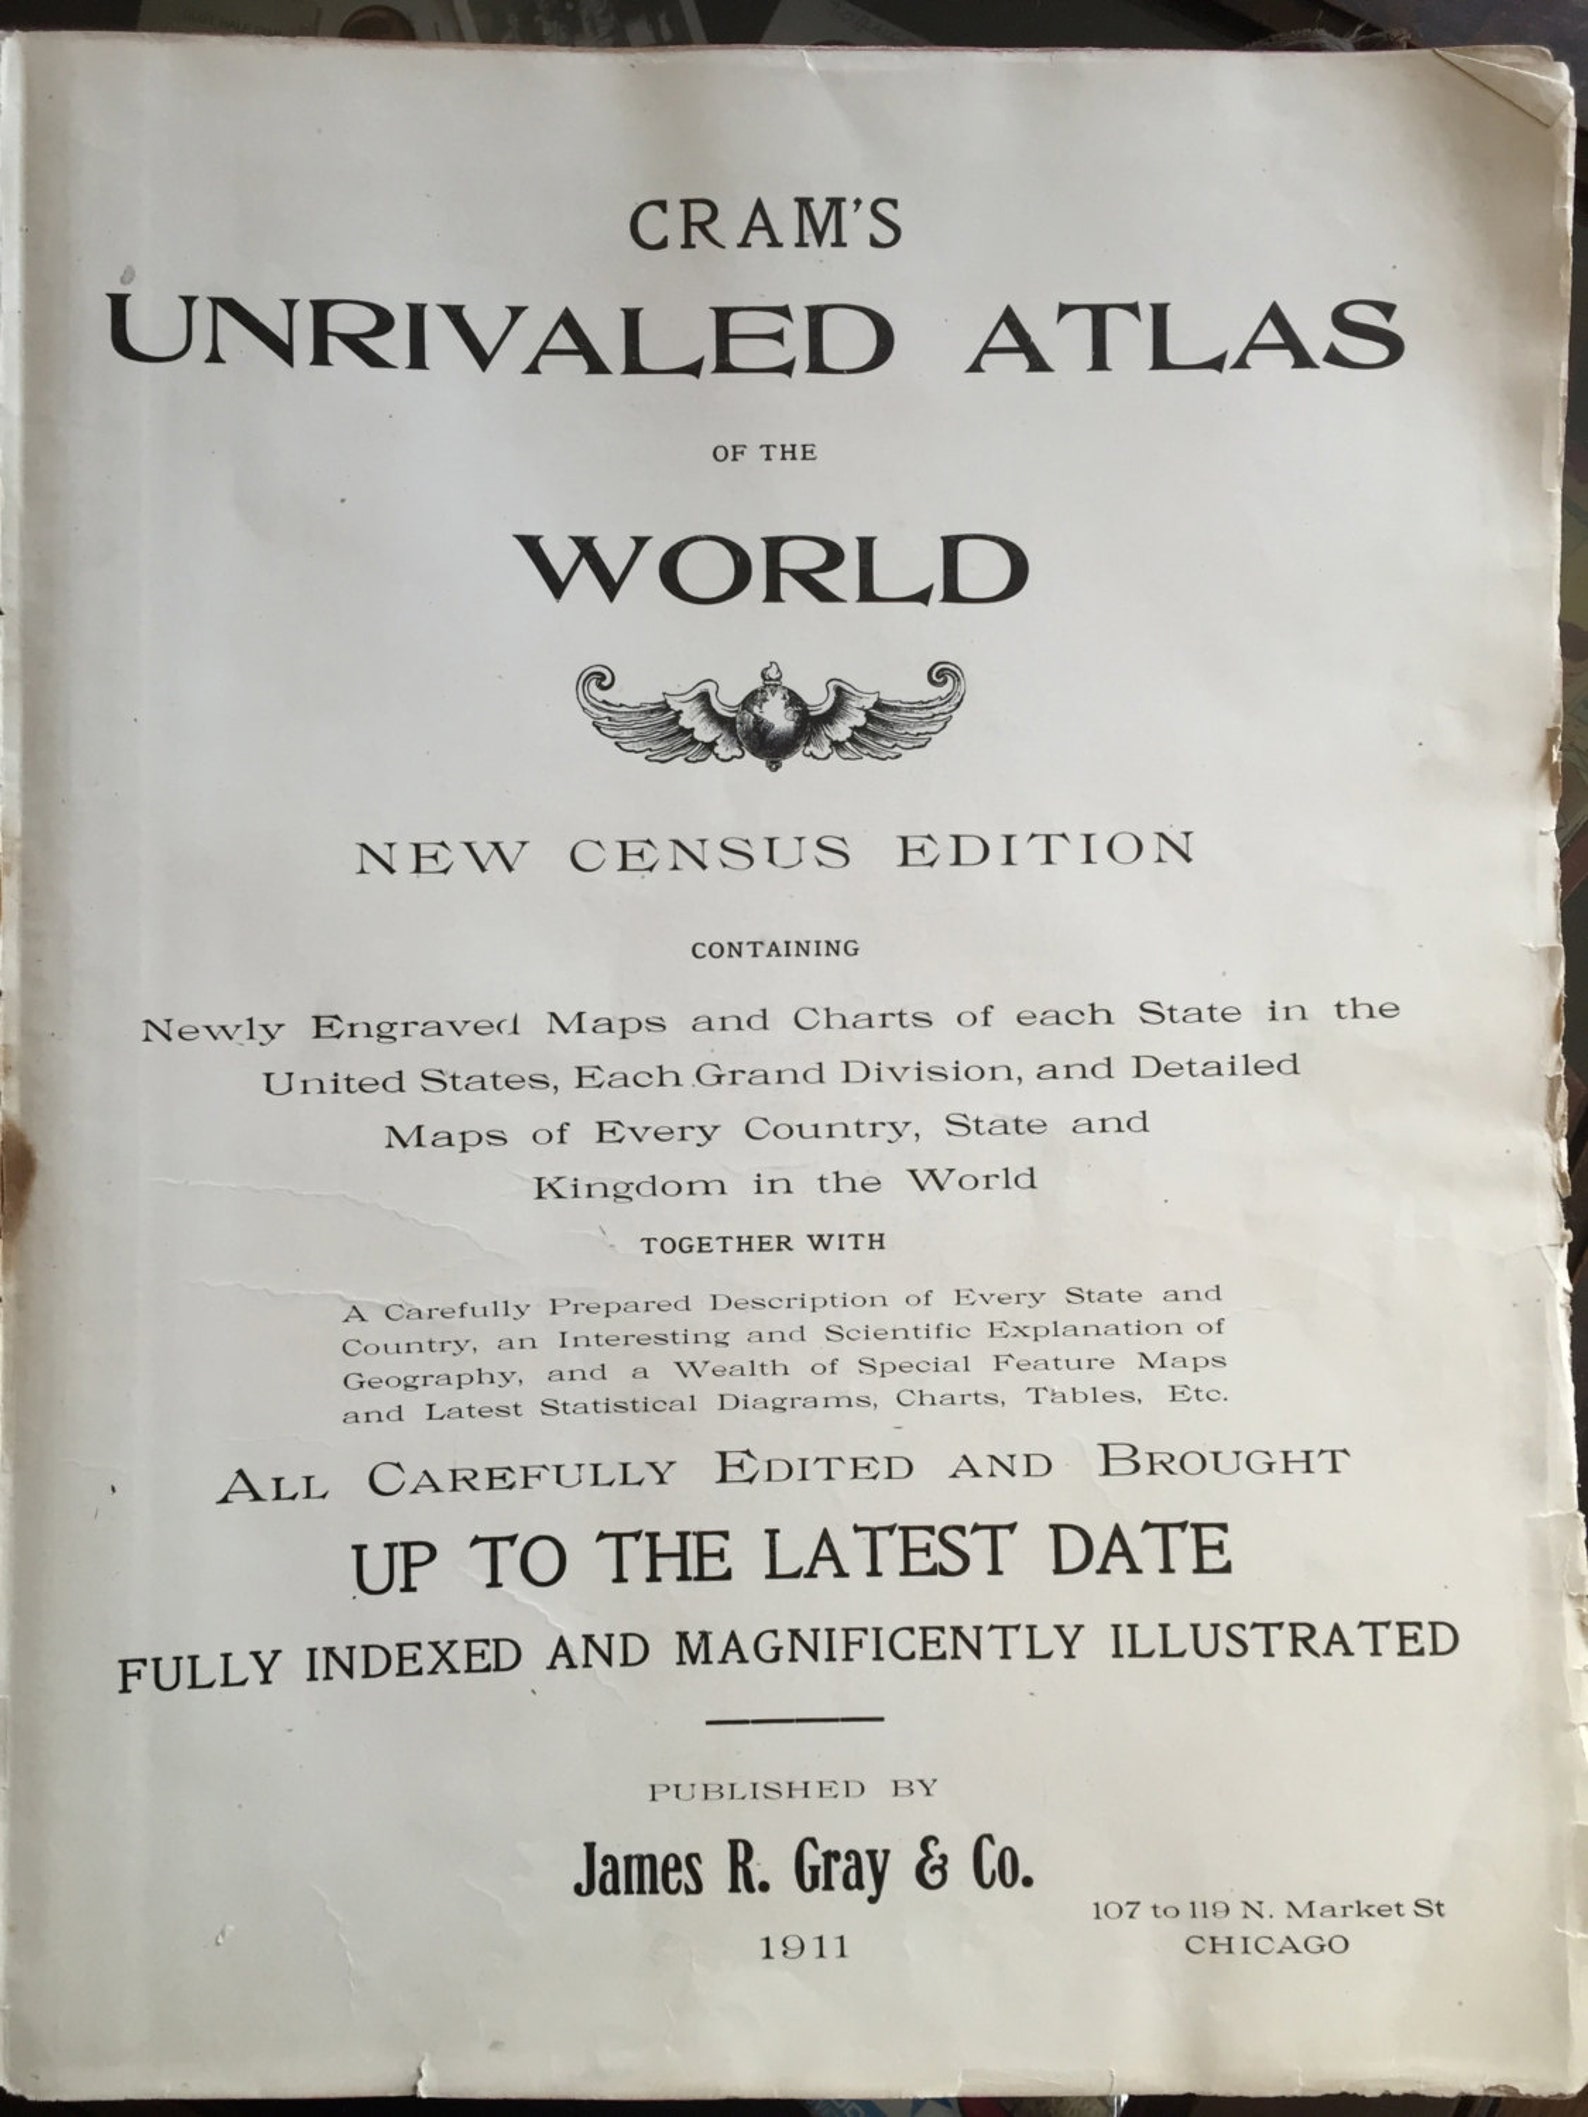 Cram's Unrivaled Atlas of World 1911 New Census Edition | Etsy